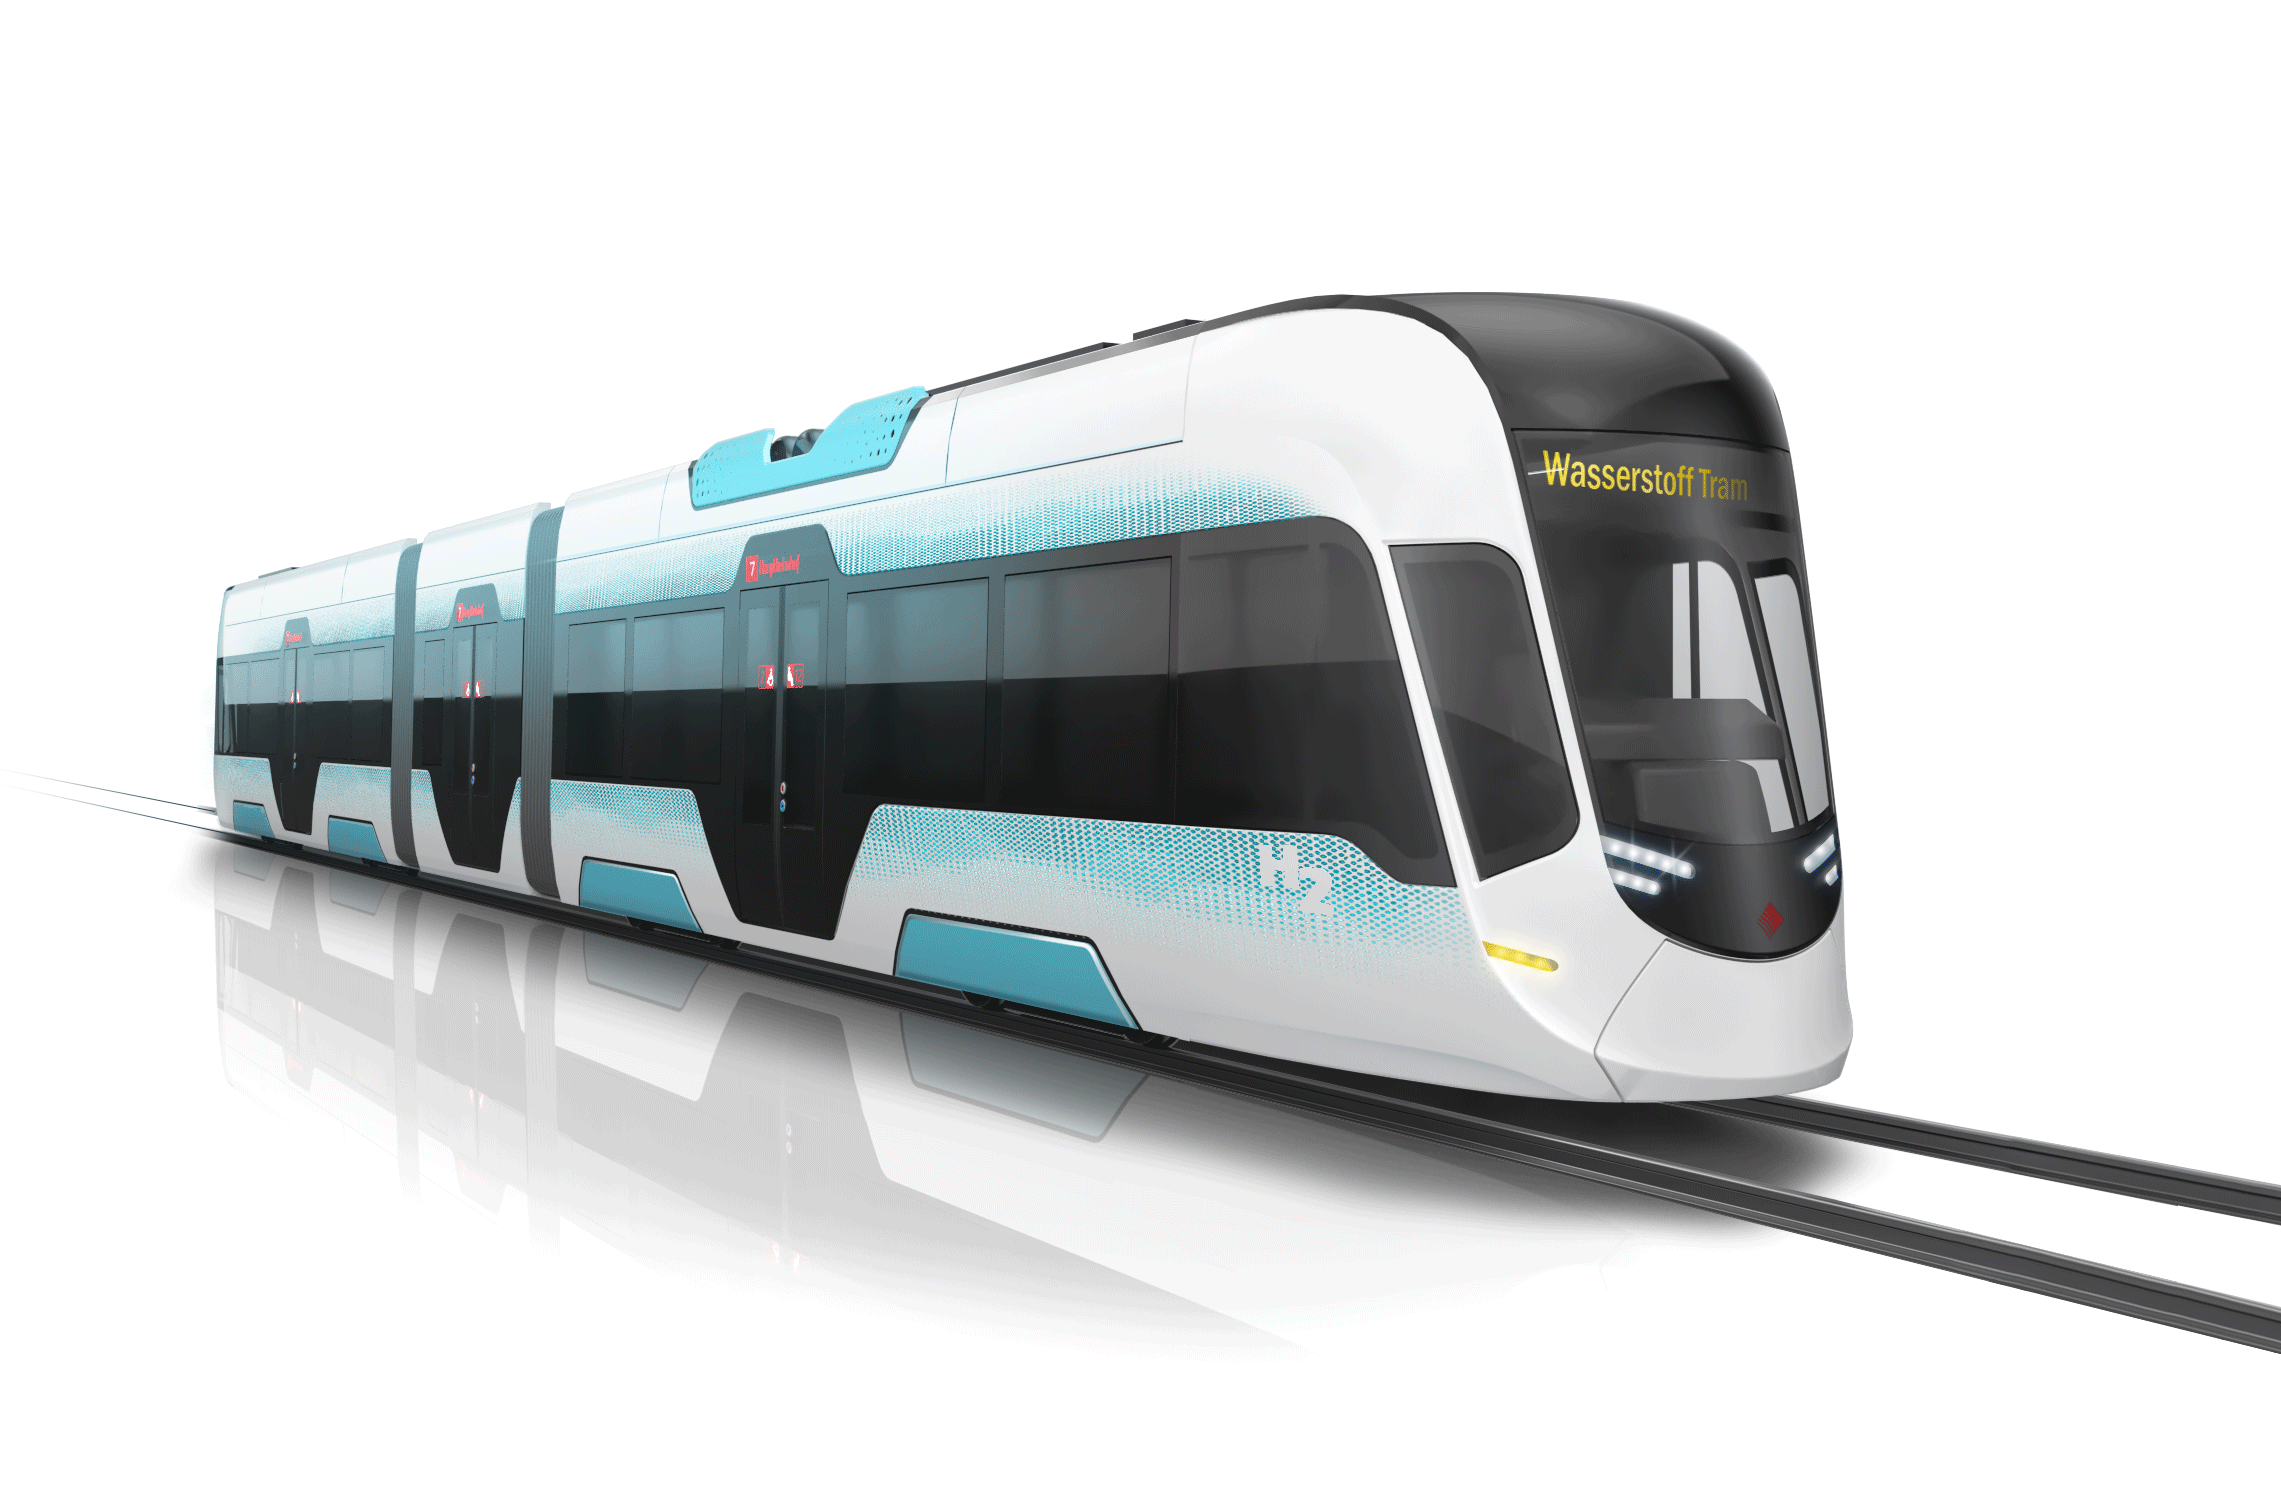 HÖRMANN Vehicle Engineering_Innovationen_H2 Tram